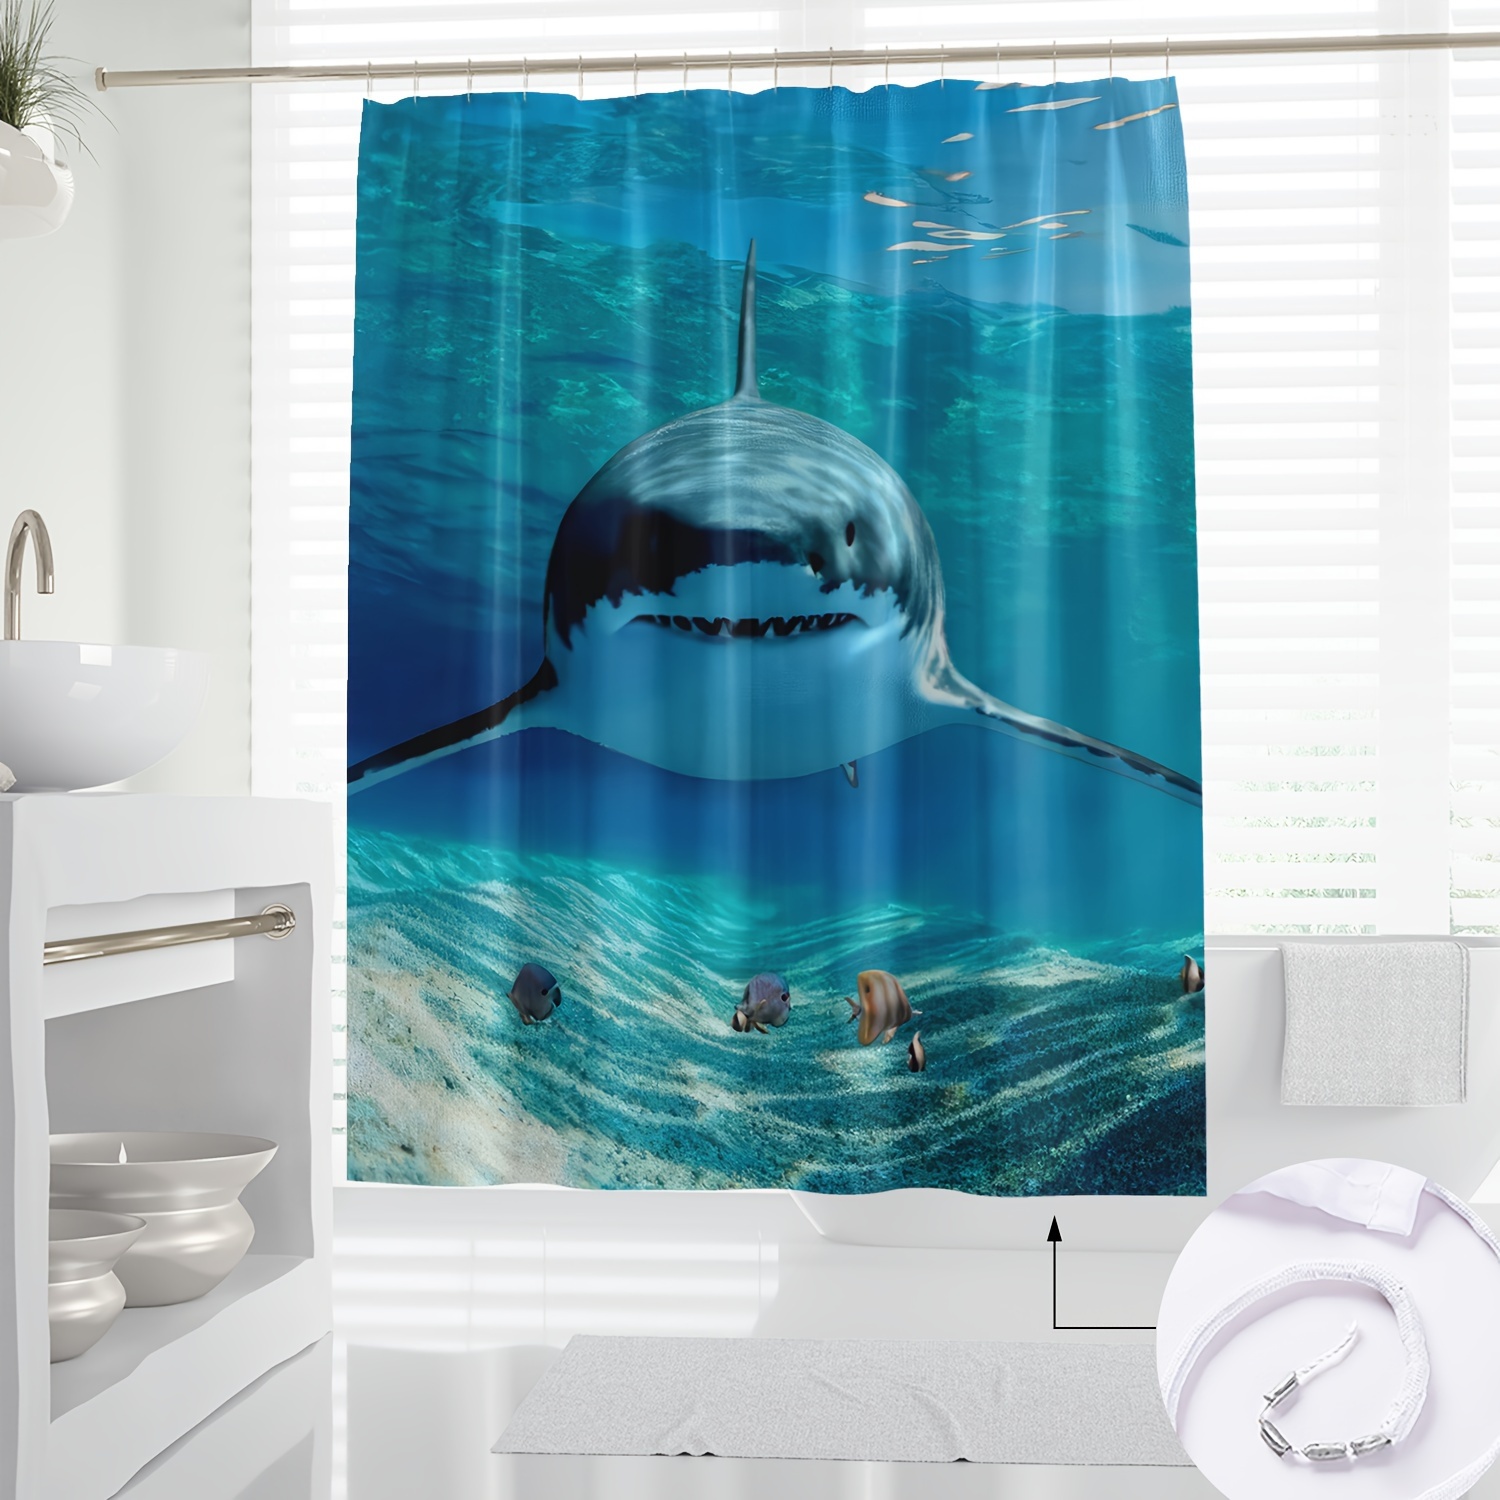 

Vibrant Blue Ocean Shark Scene - Waterproof Polyester Shower Curtain With Hooks, Machine Washable Bathroom Decor Mermaid Shower Curtain Ocean Bathroom Decor